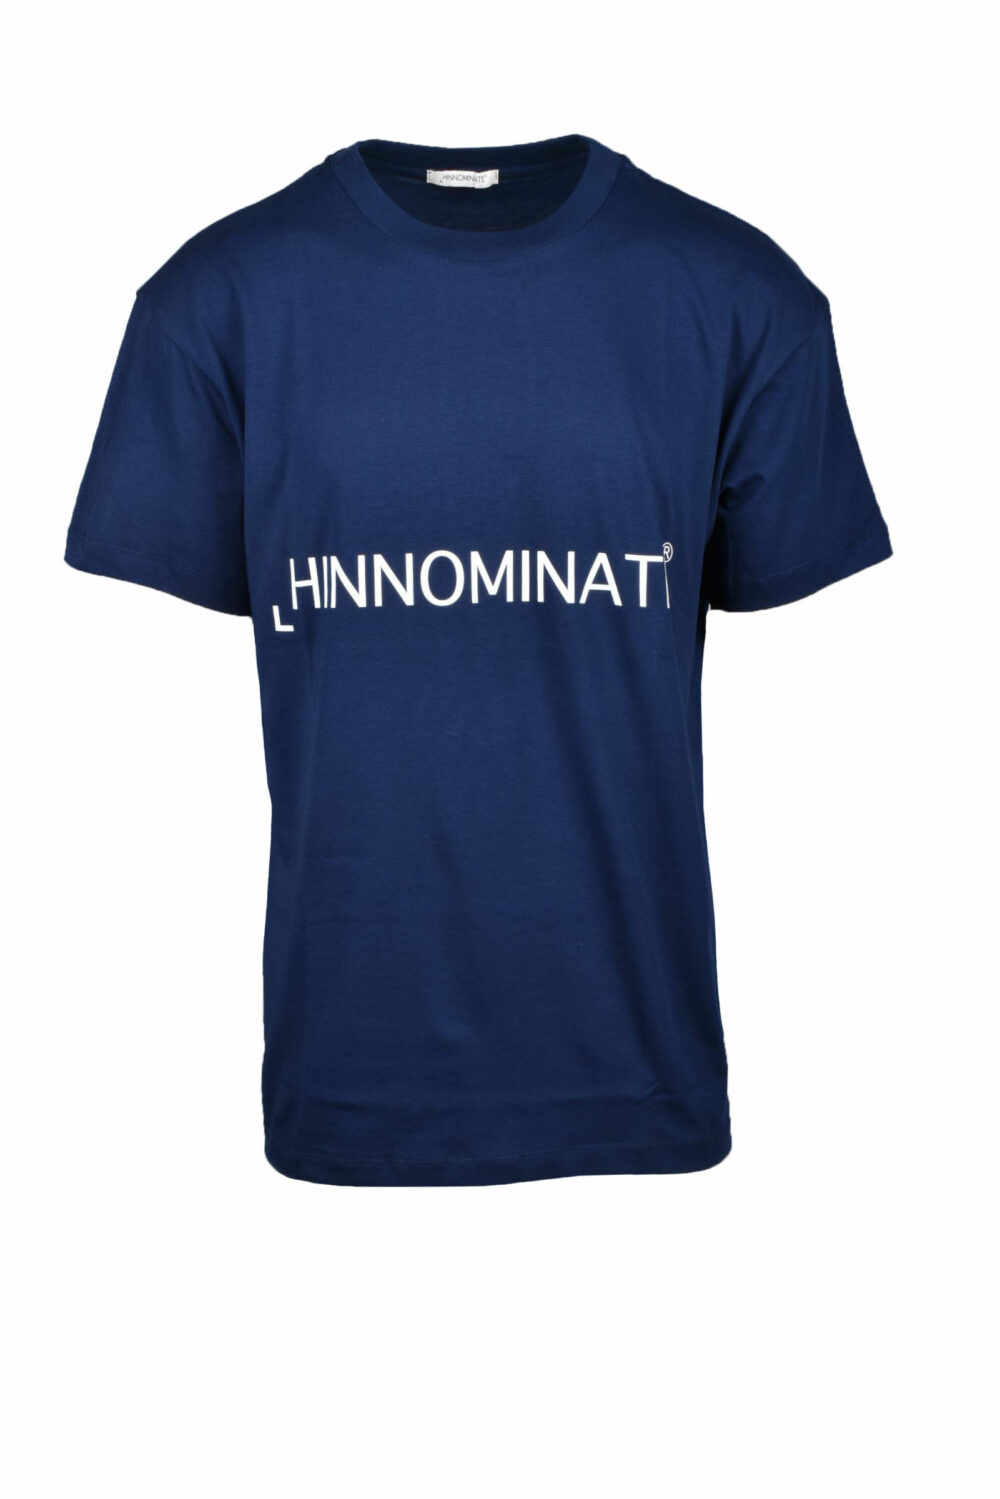 T-shirt Hinnominate Blu - Foto 1